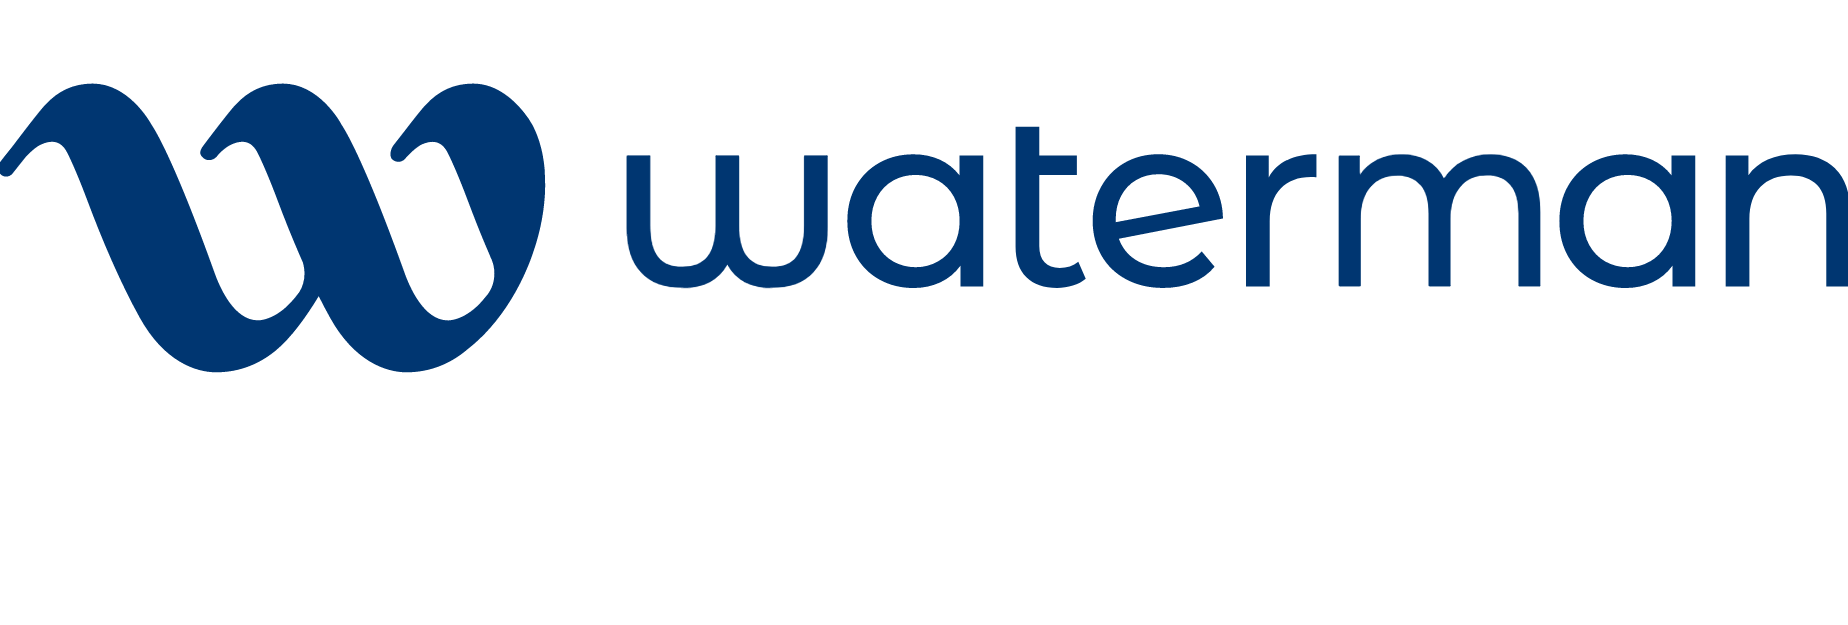 Waterman Structures Ltd logo